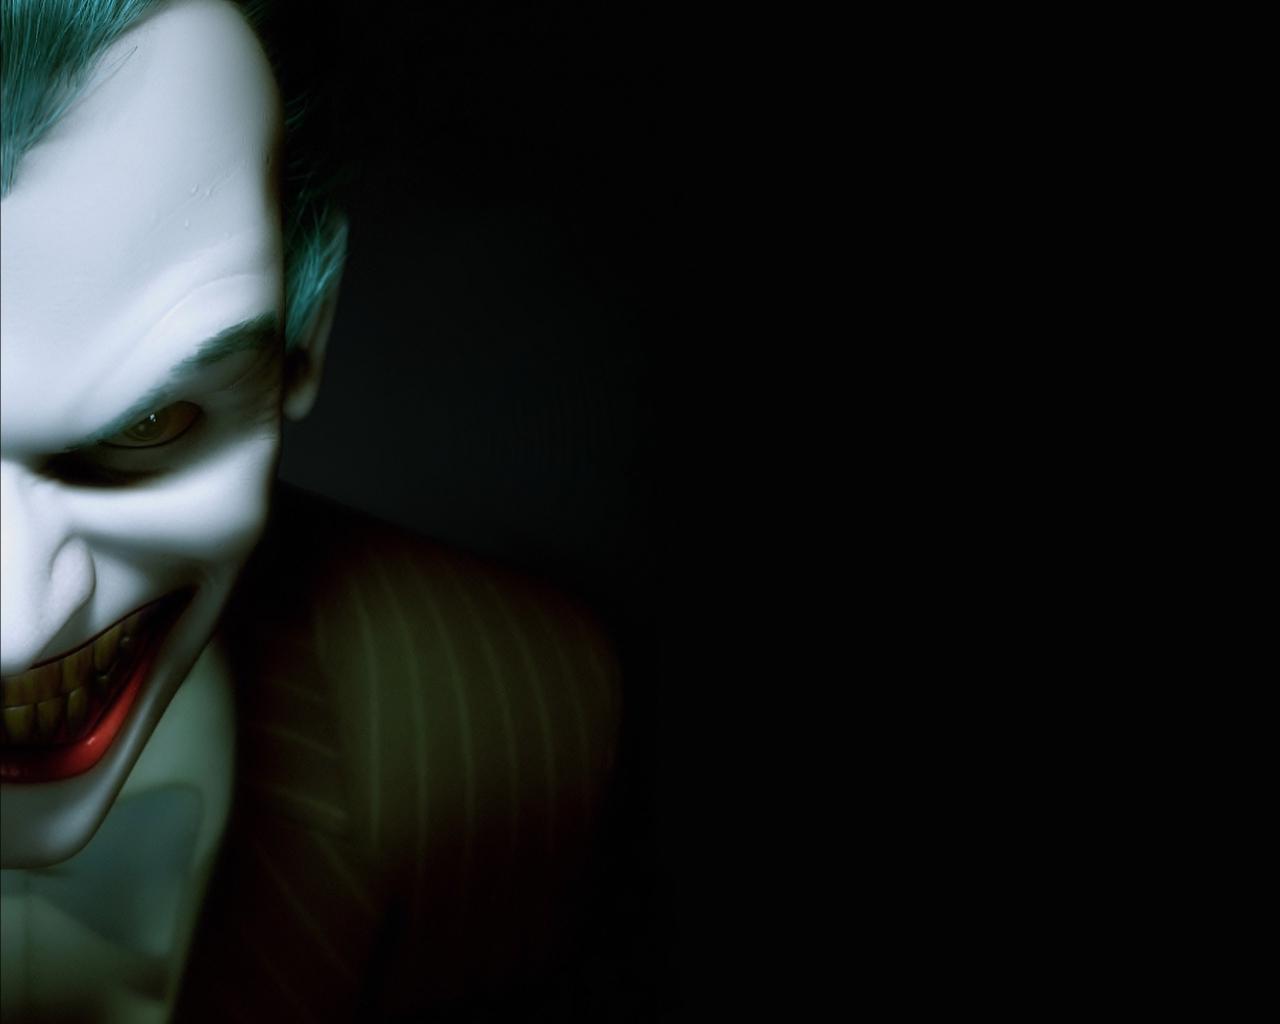 Joker Picture